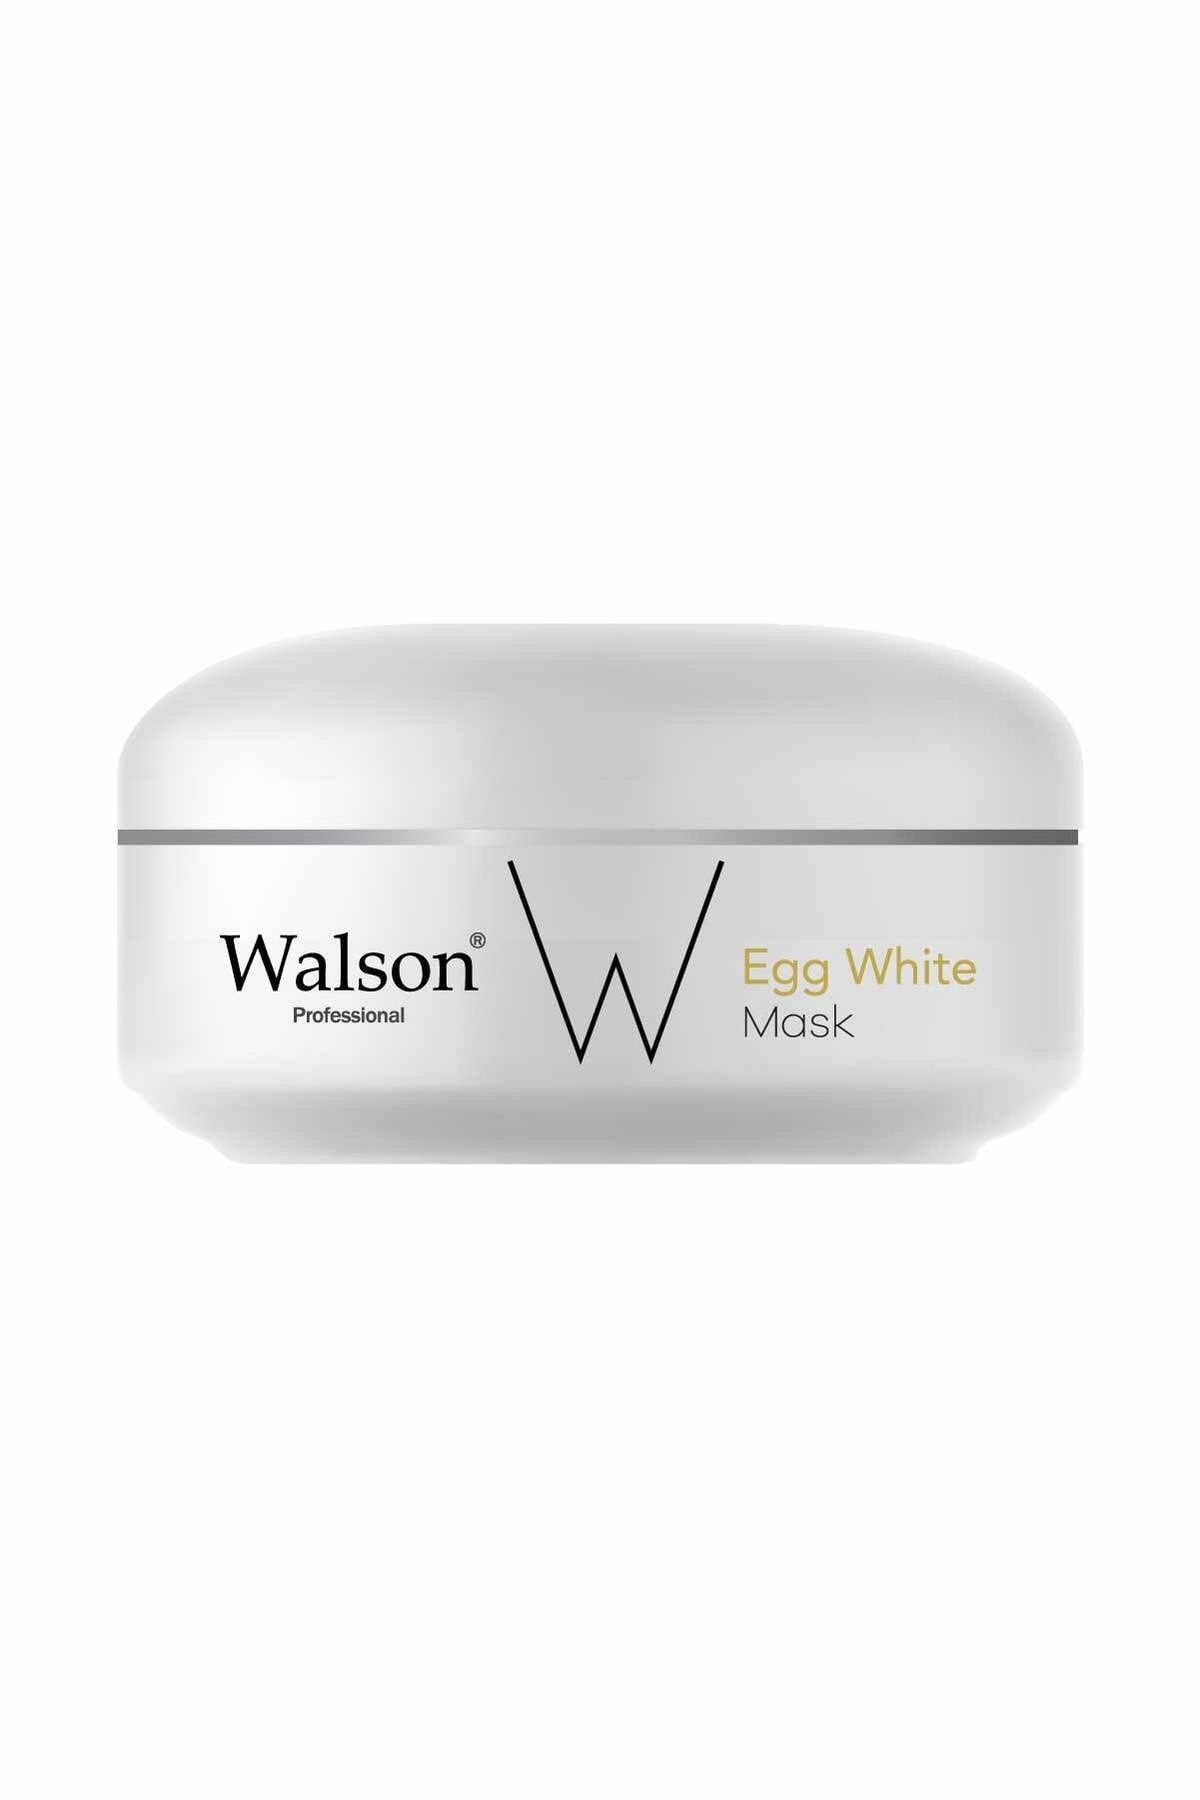 walson Egg White Mask - Yumurta Akı Maskesi 100ml Leke Ve Gözenek Giderici